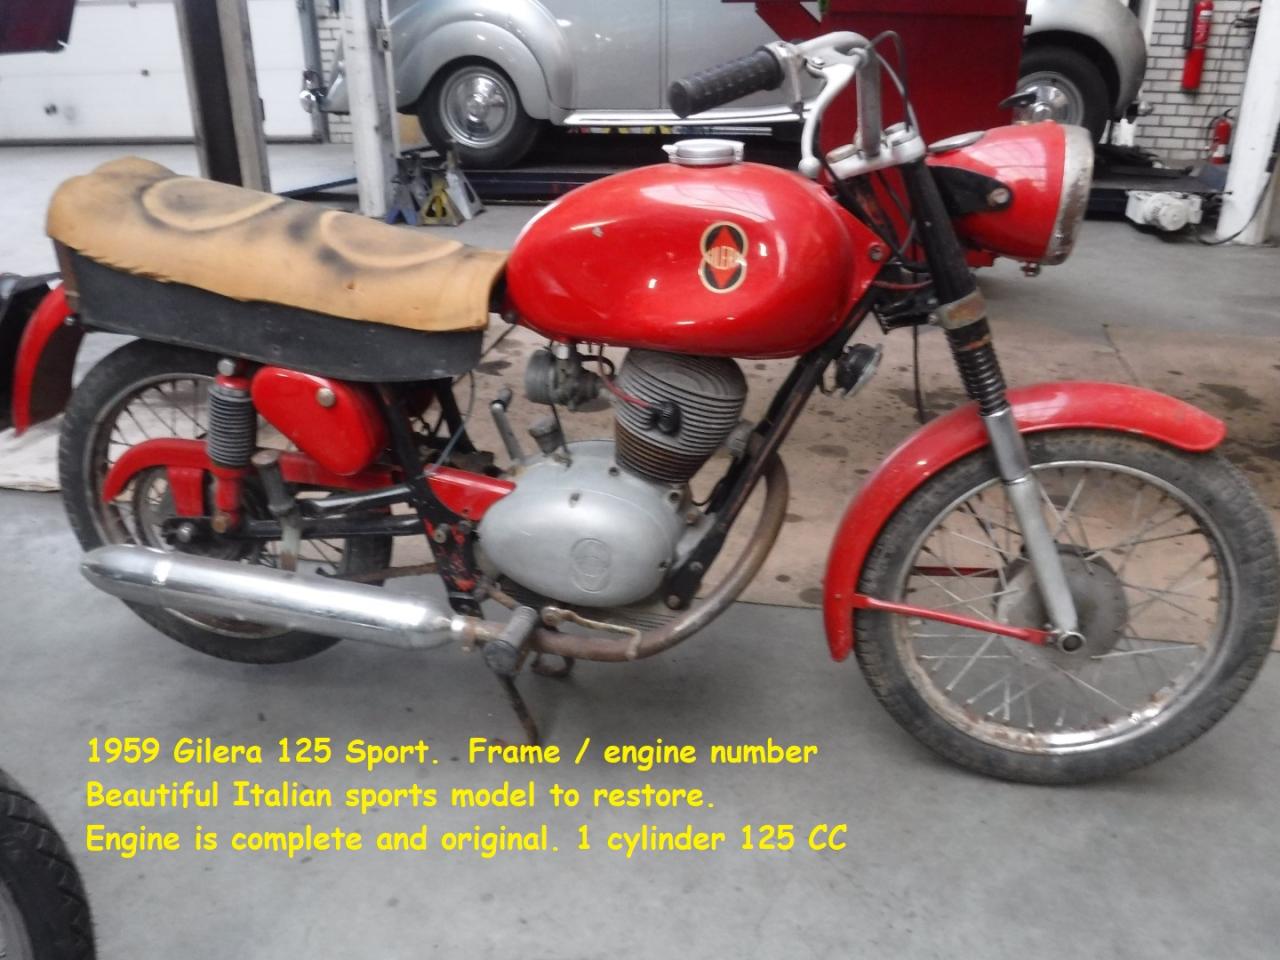 1959 Gilera 125 Sport to restore